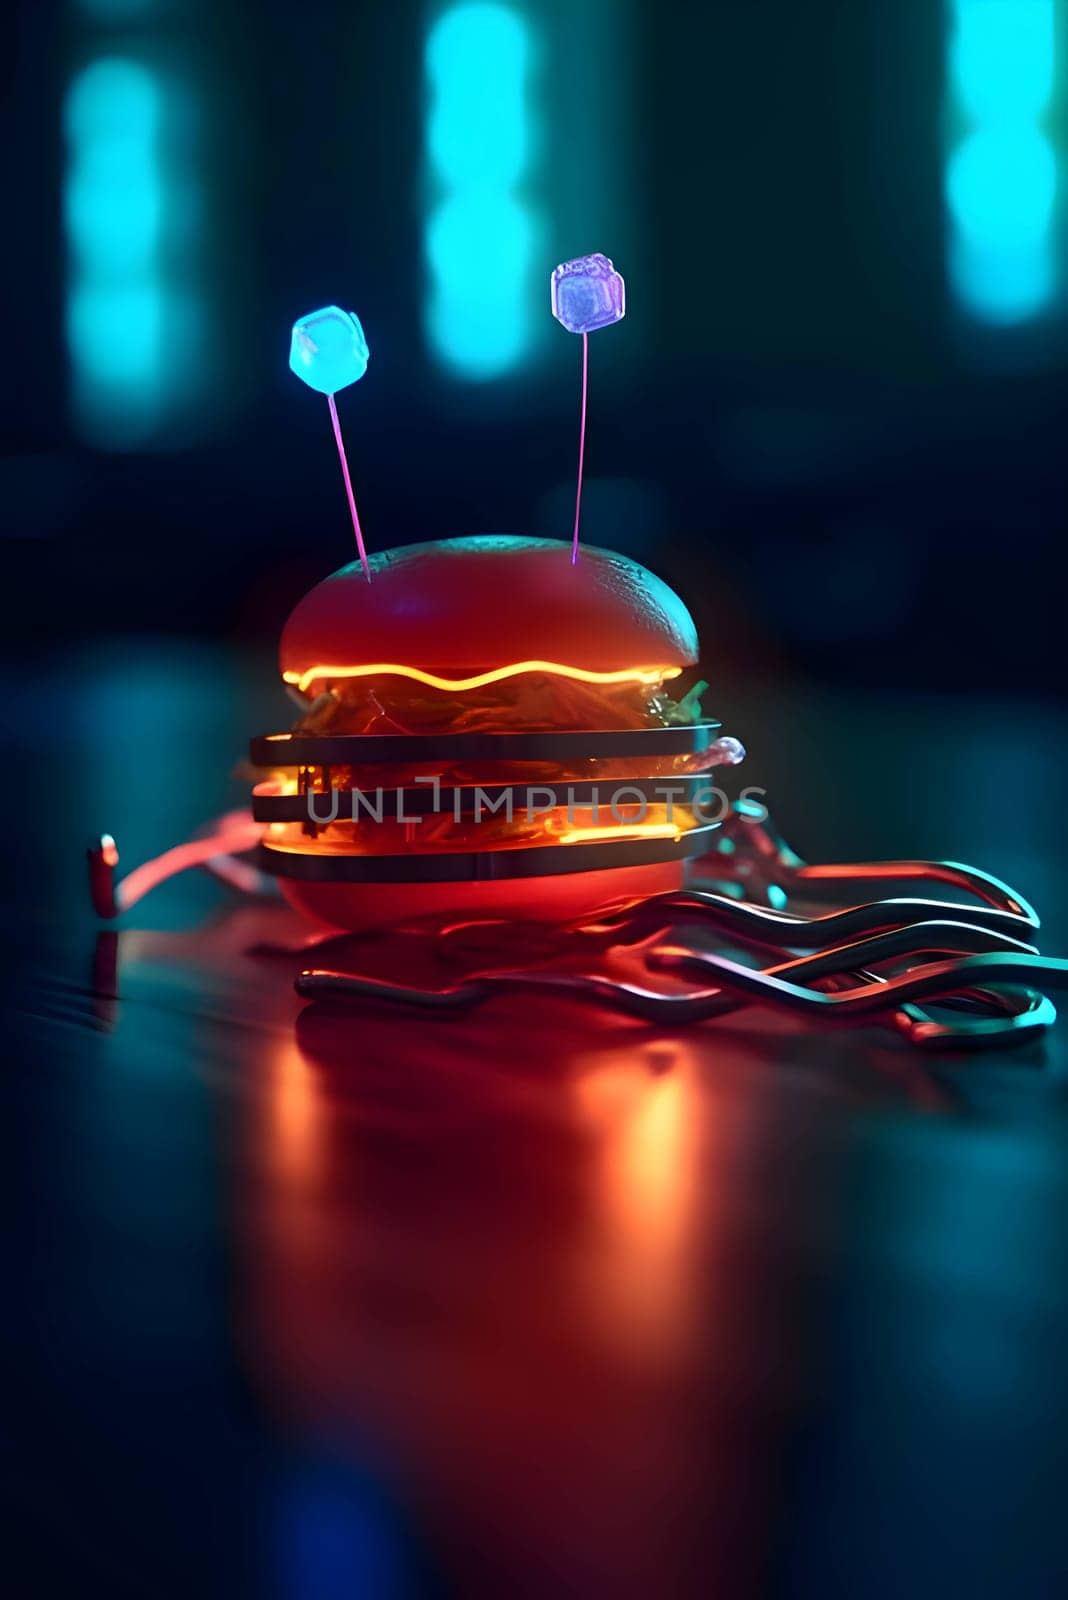 A futuristic neon hamburger illuminating the dark background, showcasing a modern twist on a classic favorite.